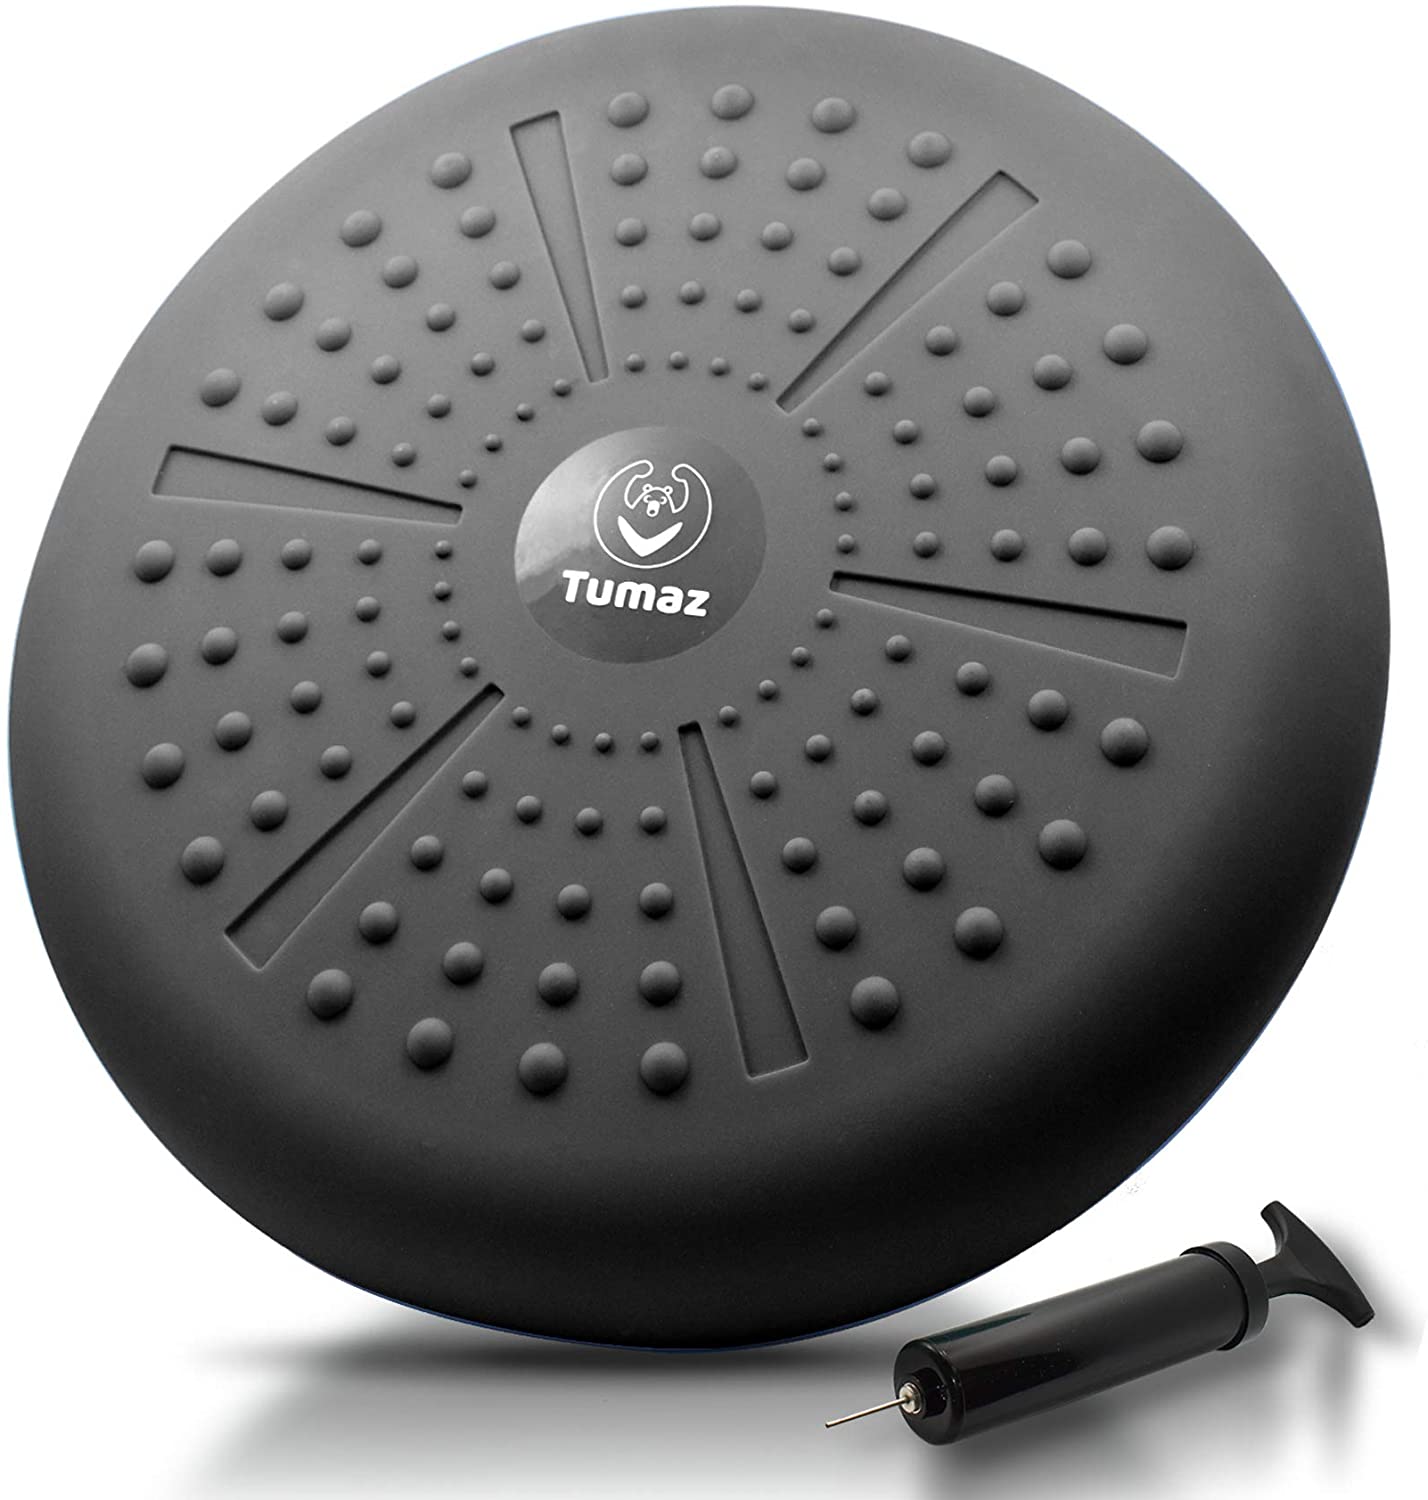 Balance Disc Board, Wobble Cushion for Posture & Core Strength, Black, Tumaz - image 1 of 9